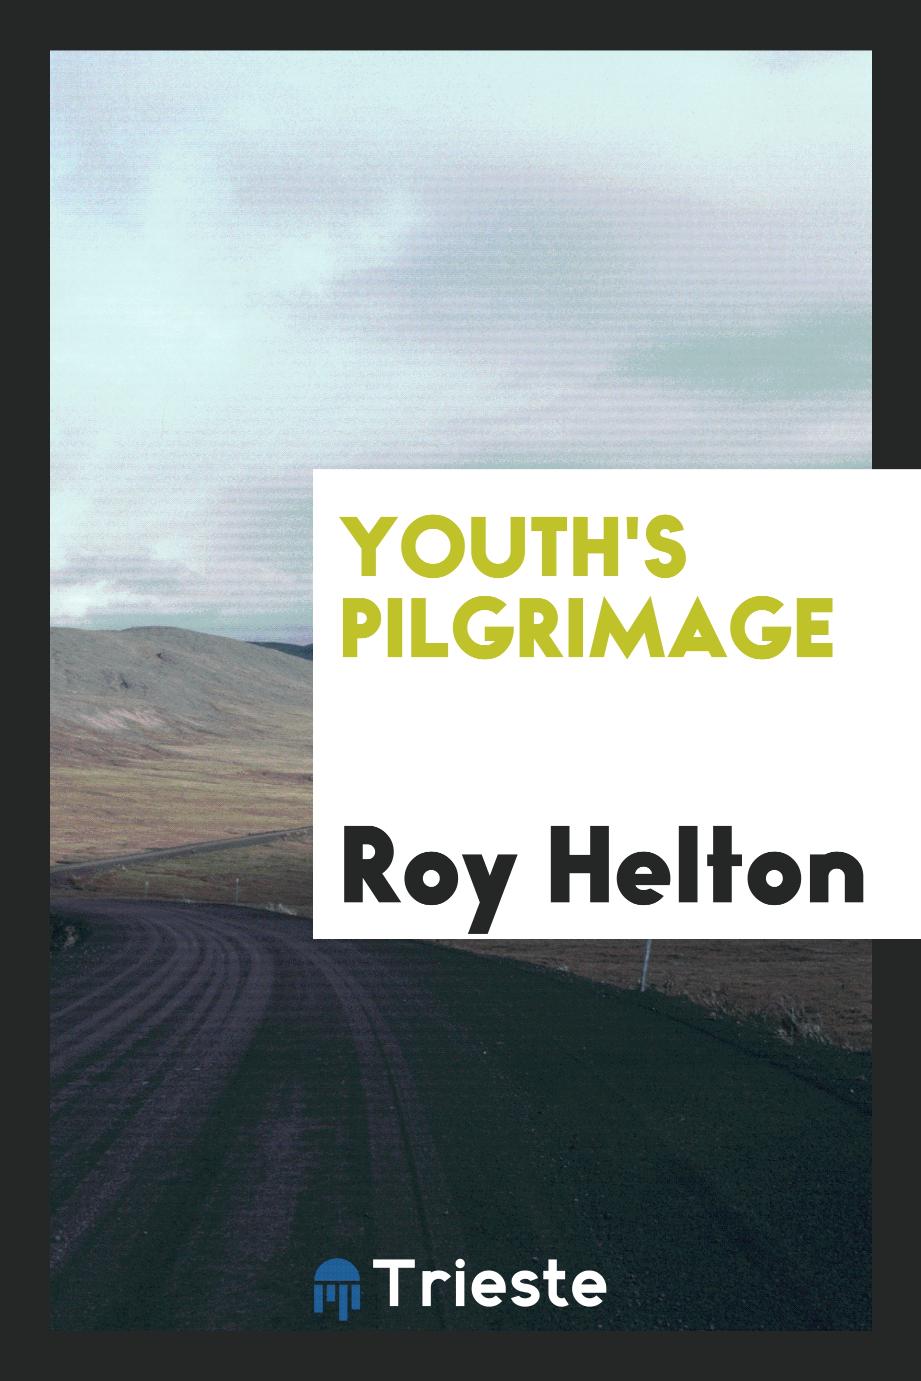 Youth's pilgrimage